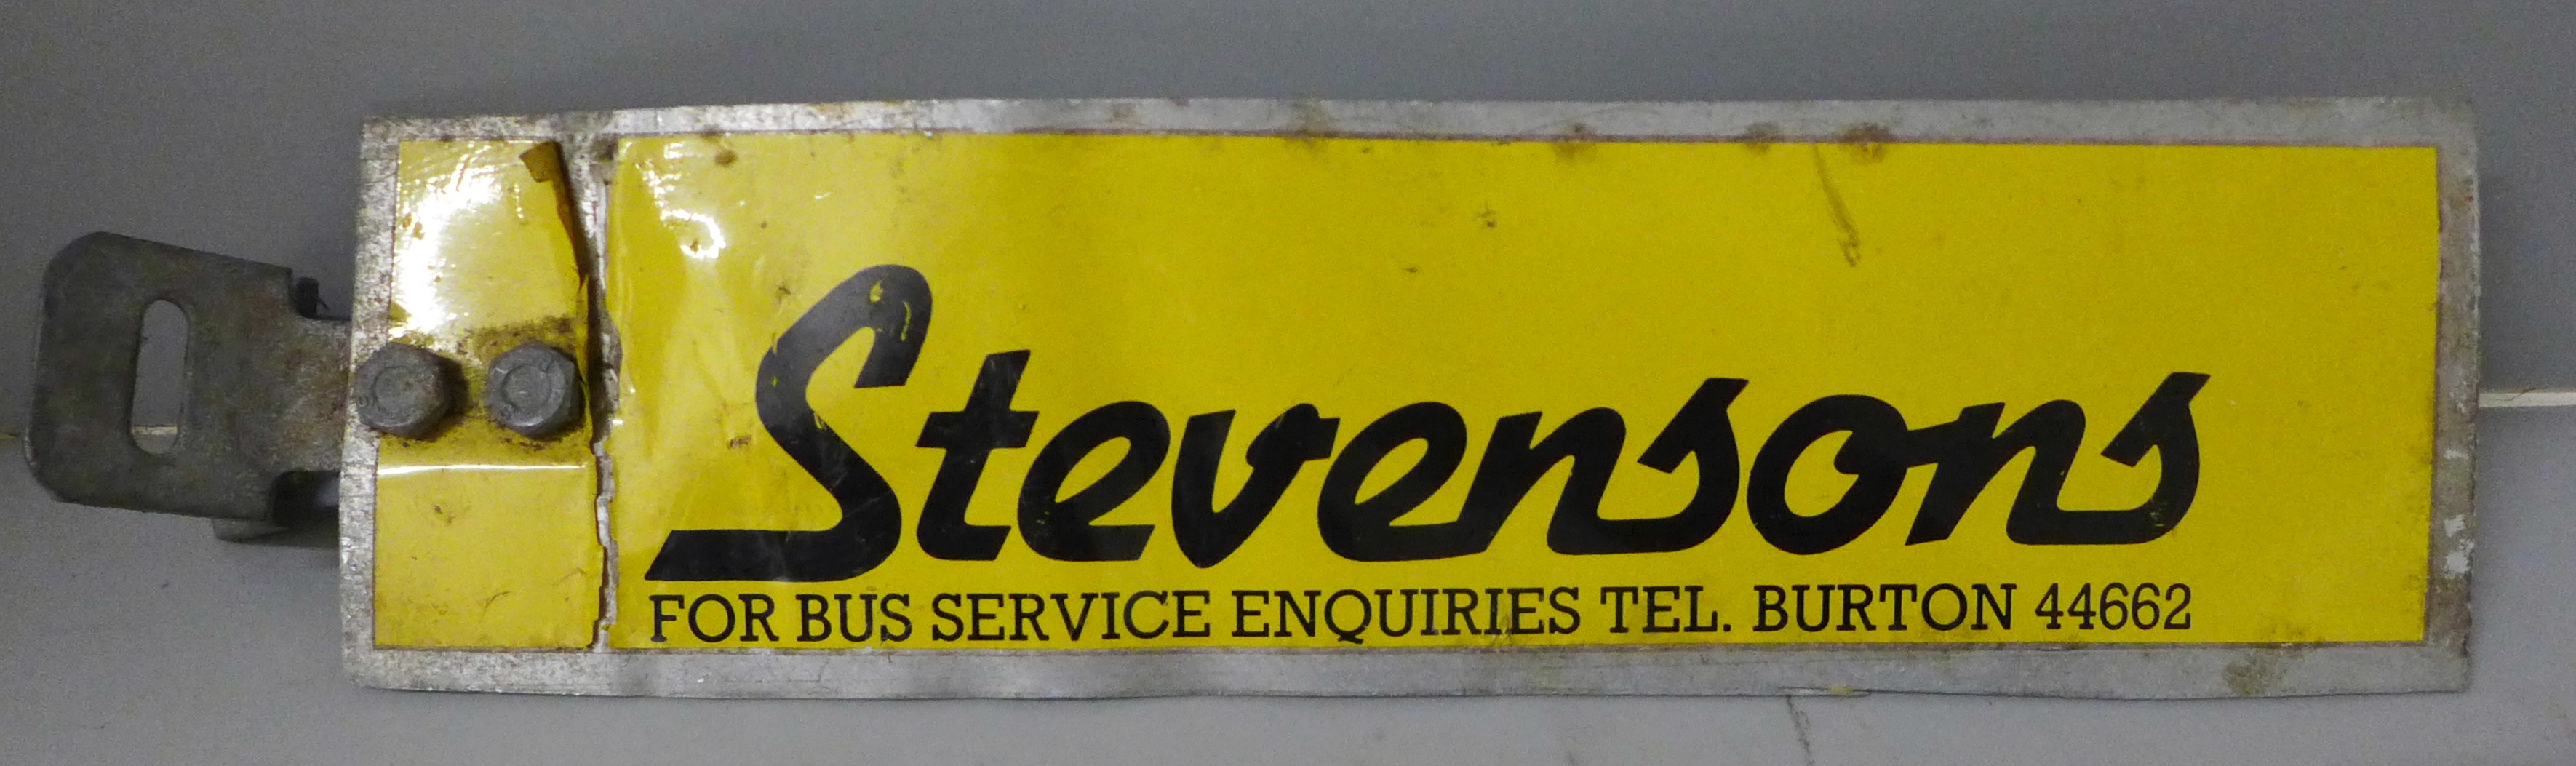 Four Stevensons bus stop plates - Image 2 of 2